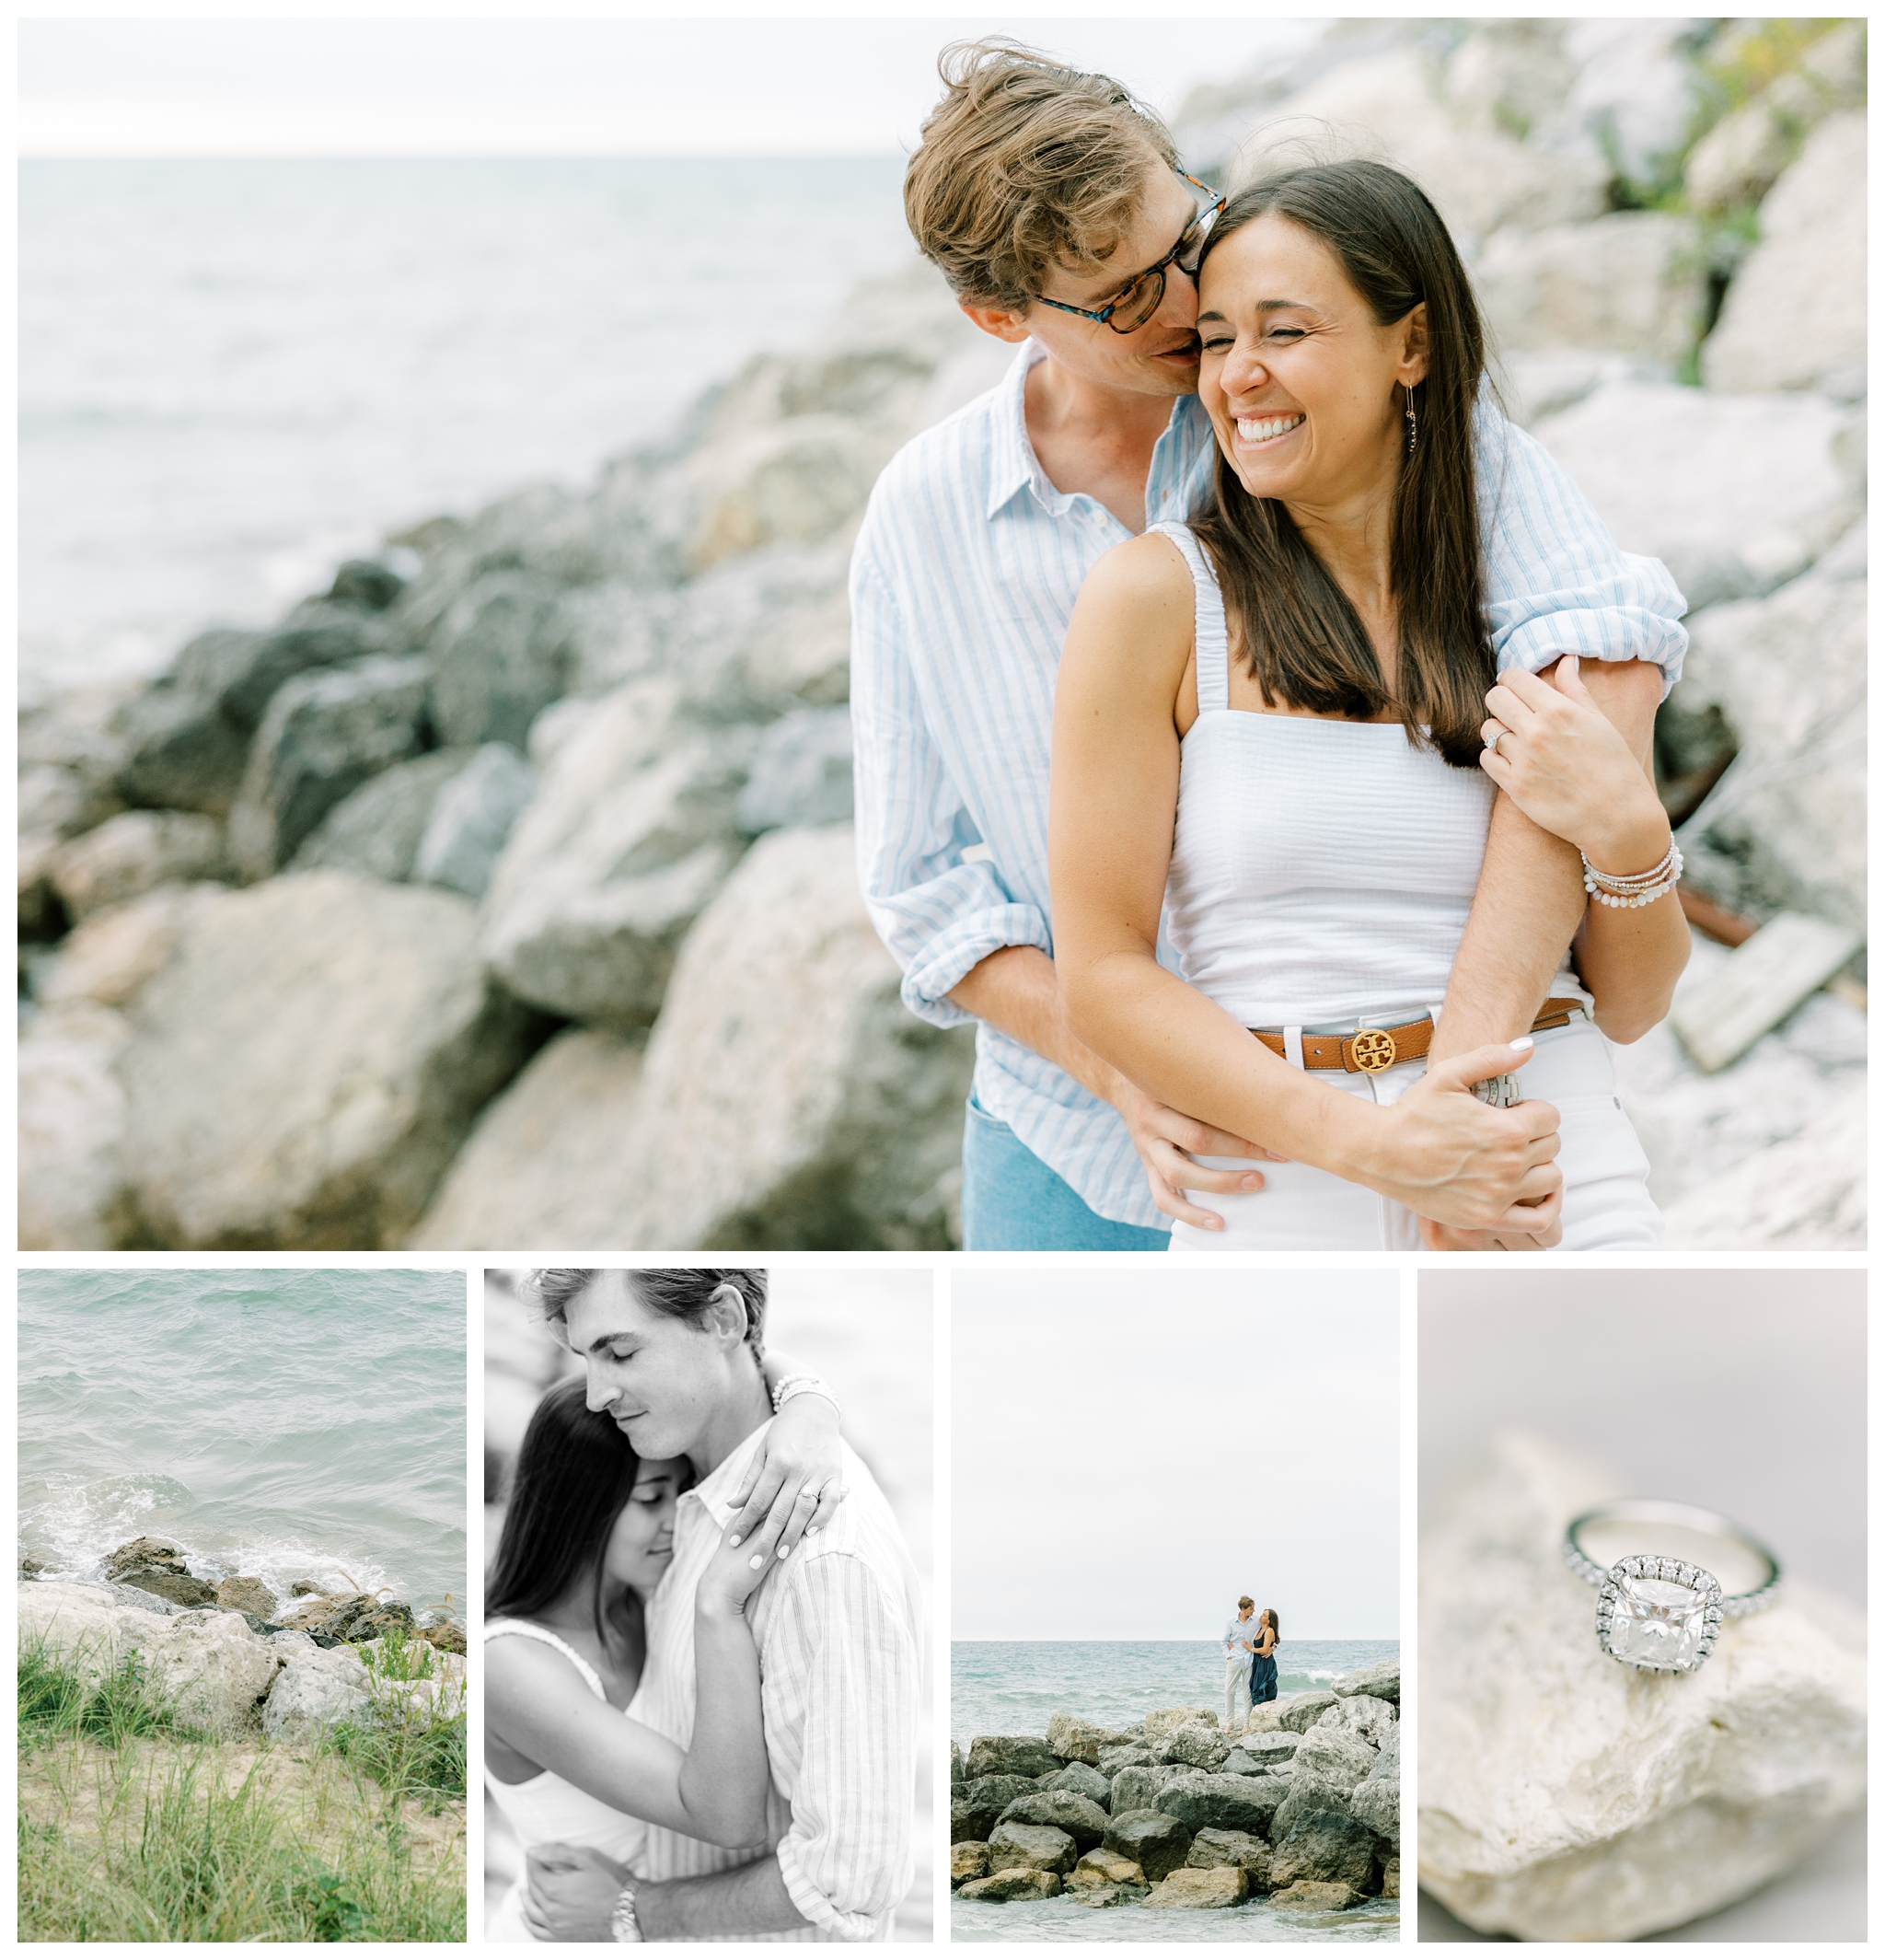 romantic engagement shoot on rocks on lake michigan near saint joseph by josh and andrea photography